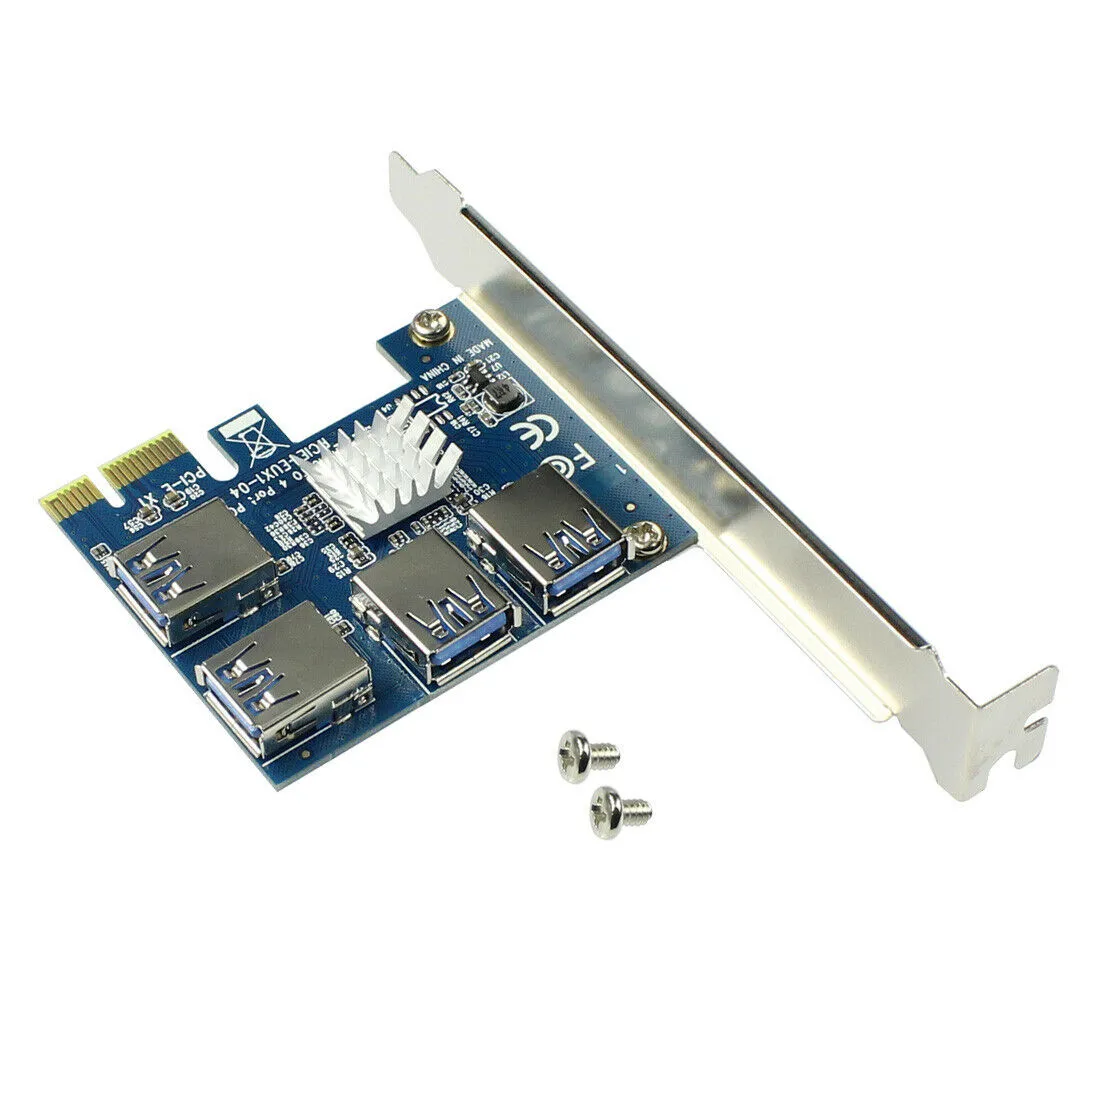 PCI-E NAAR PCI-Eアダプタ1ターン4 PCI-Expressスロット1X NAAR 16X USB 3.0 MijnbouwスペシャルライザーカードPCIeコンバータVoor BTC Mijnwerker